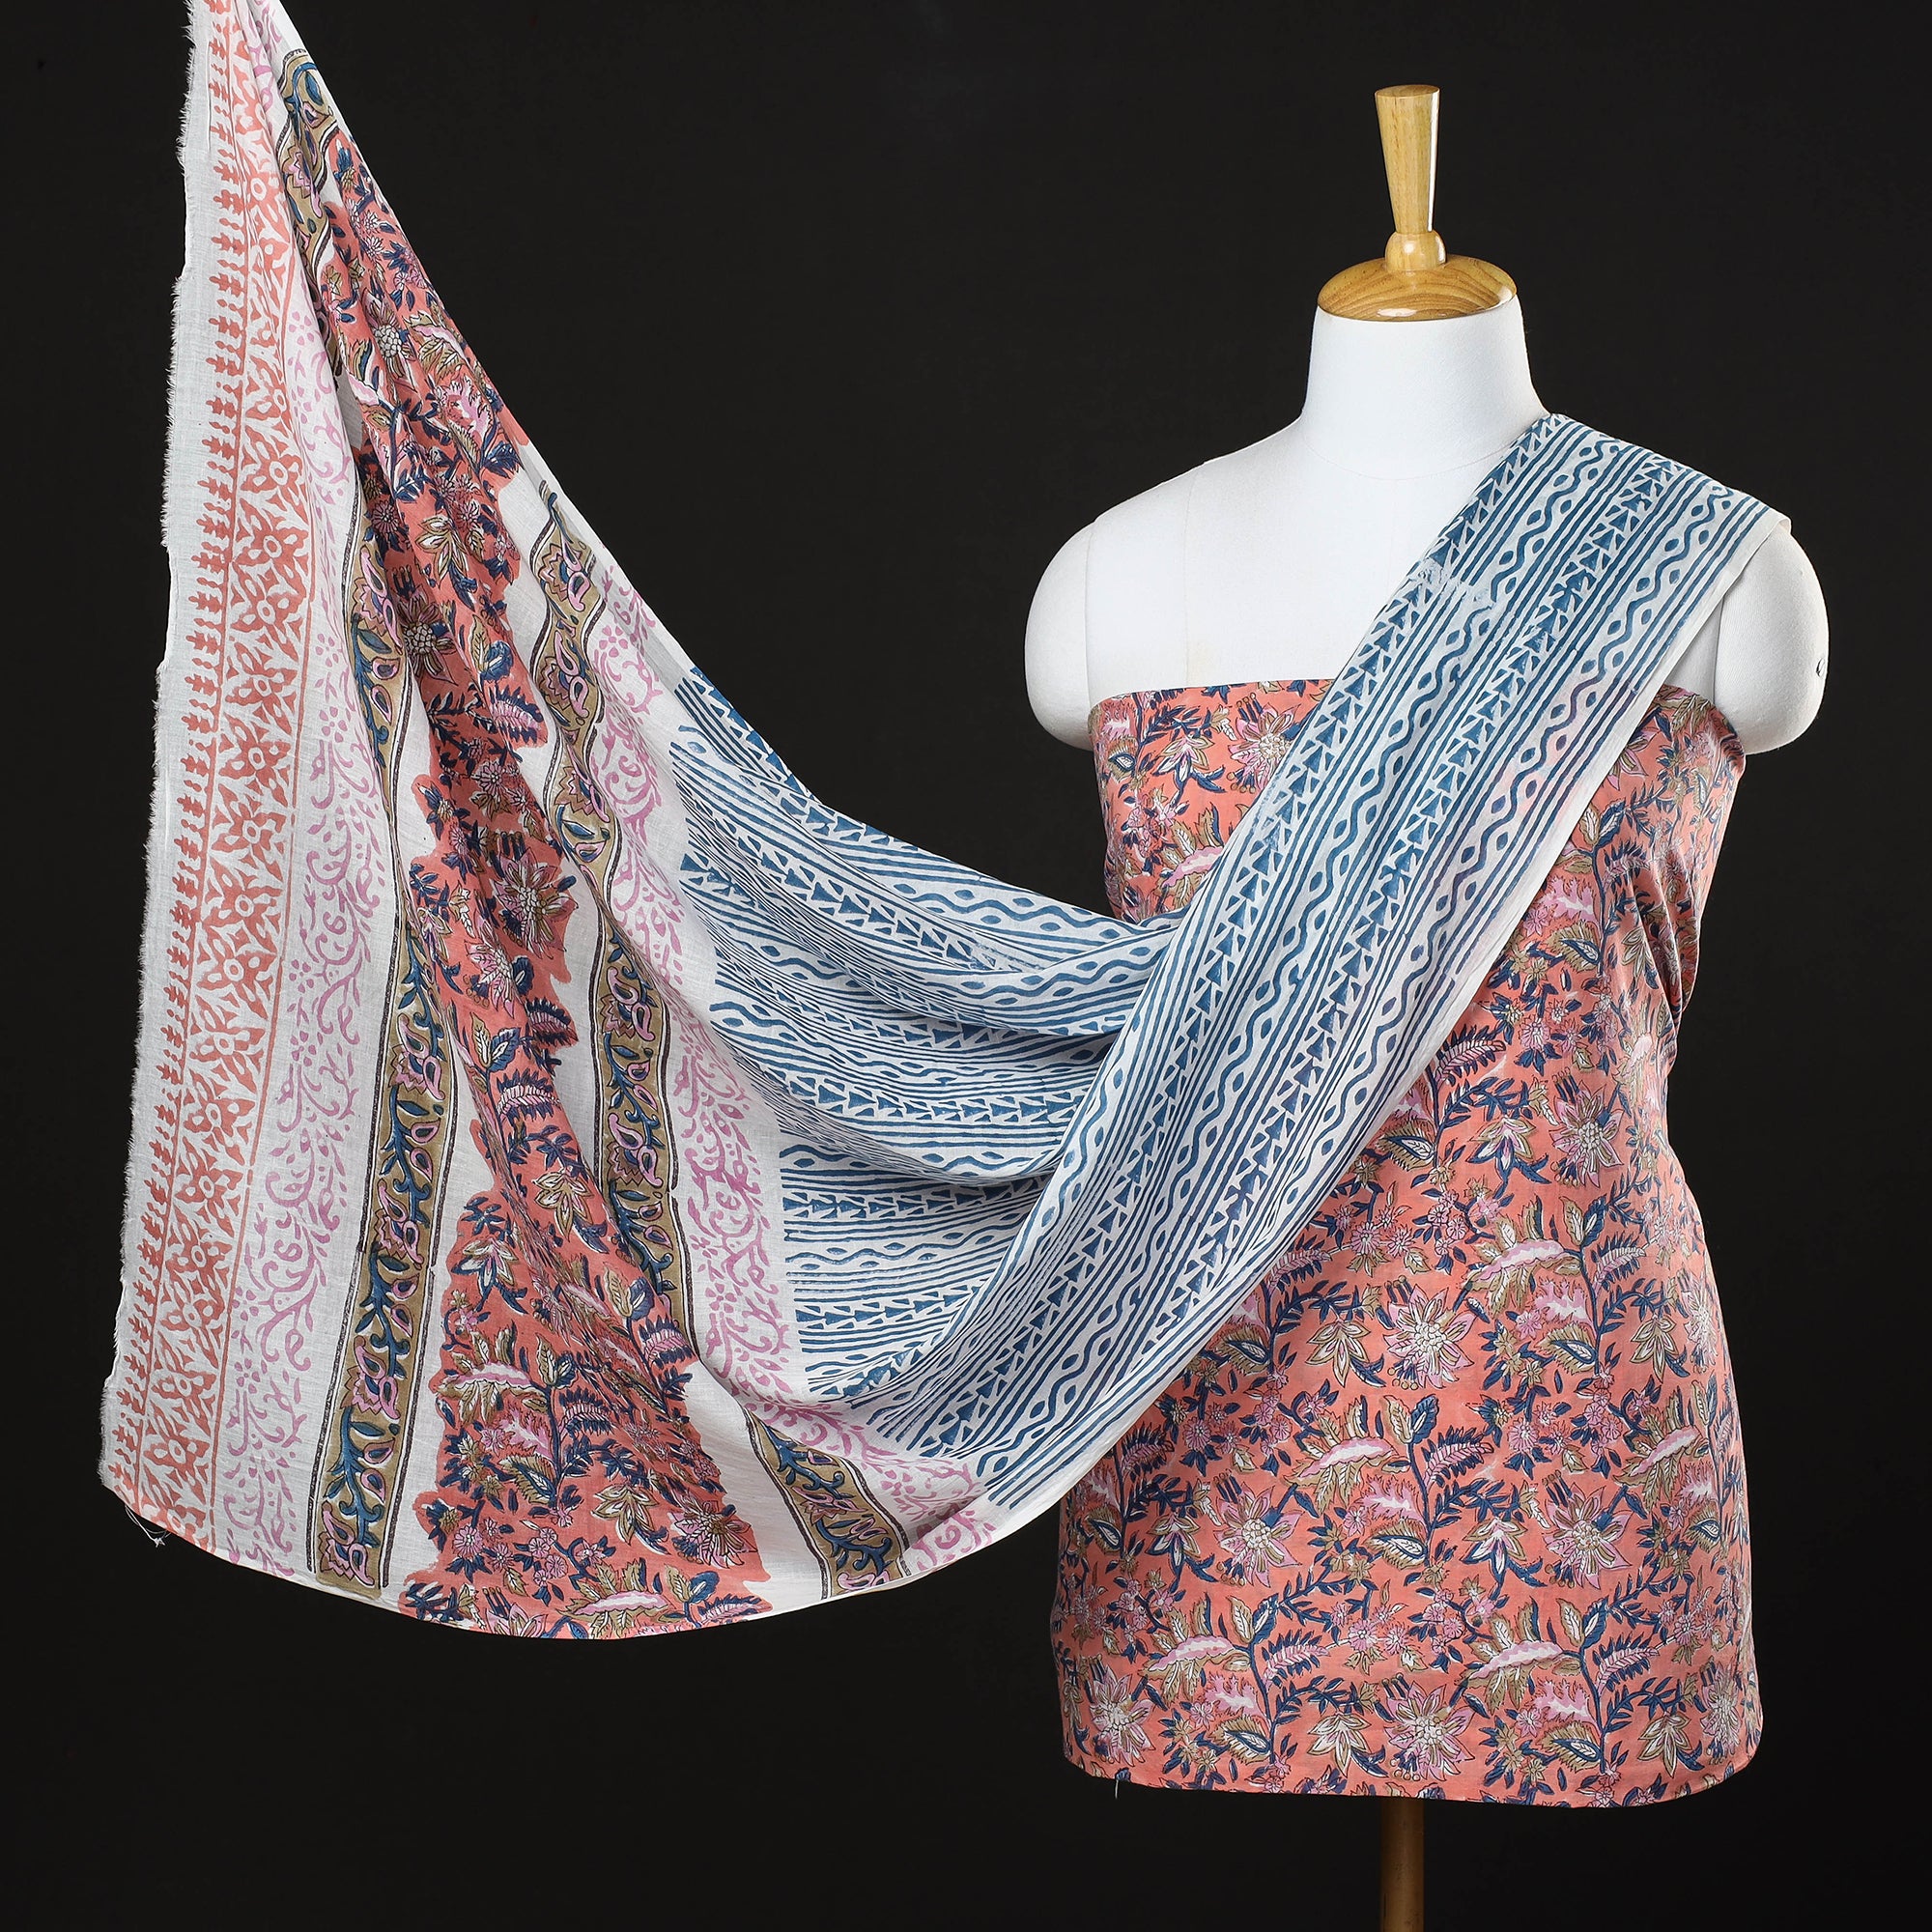 iTokri.com - Bagh Gad Block Printed Cotton 3pc Suit Material Sets by Umar  Faruk Khatri Check Collection - https://www.itokri.com/collections/itokri-partner-bagh-prints-by-umar-faruk-ismail-ji-suleman-ji-khatri  | Facebook